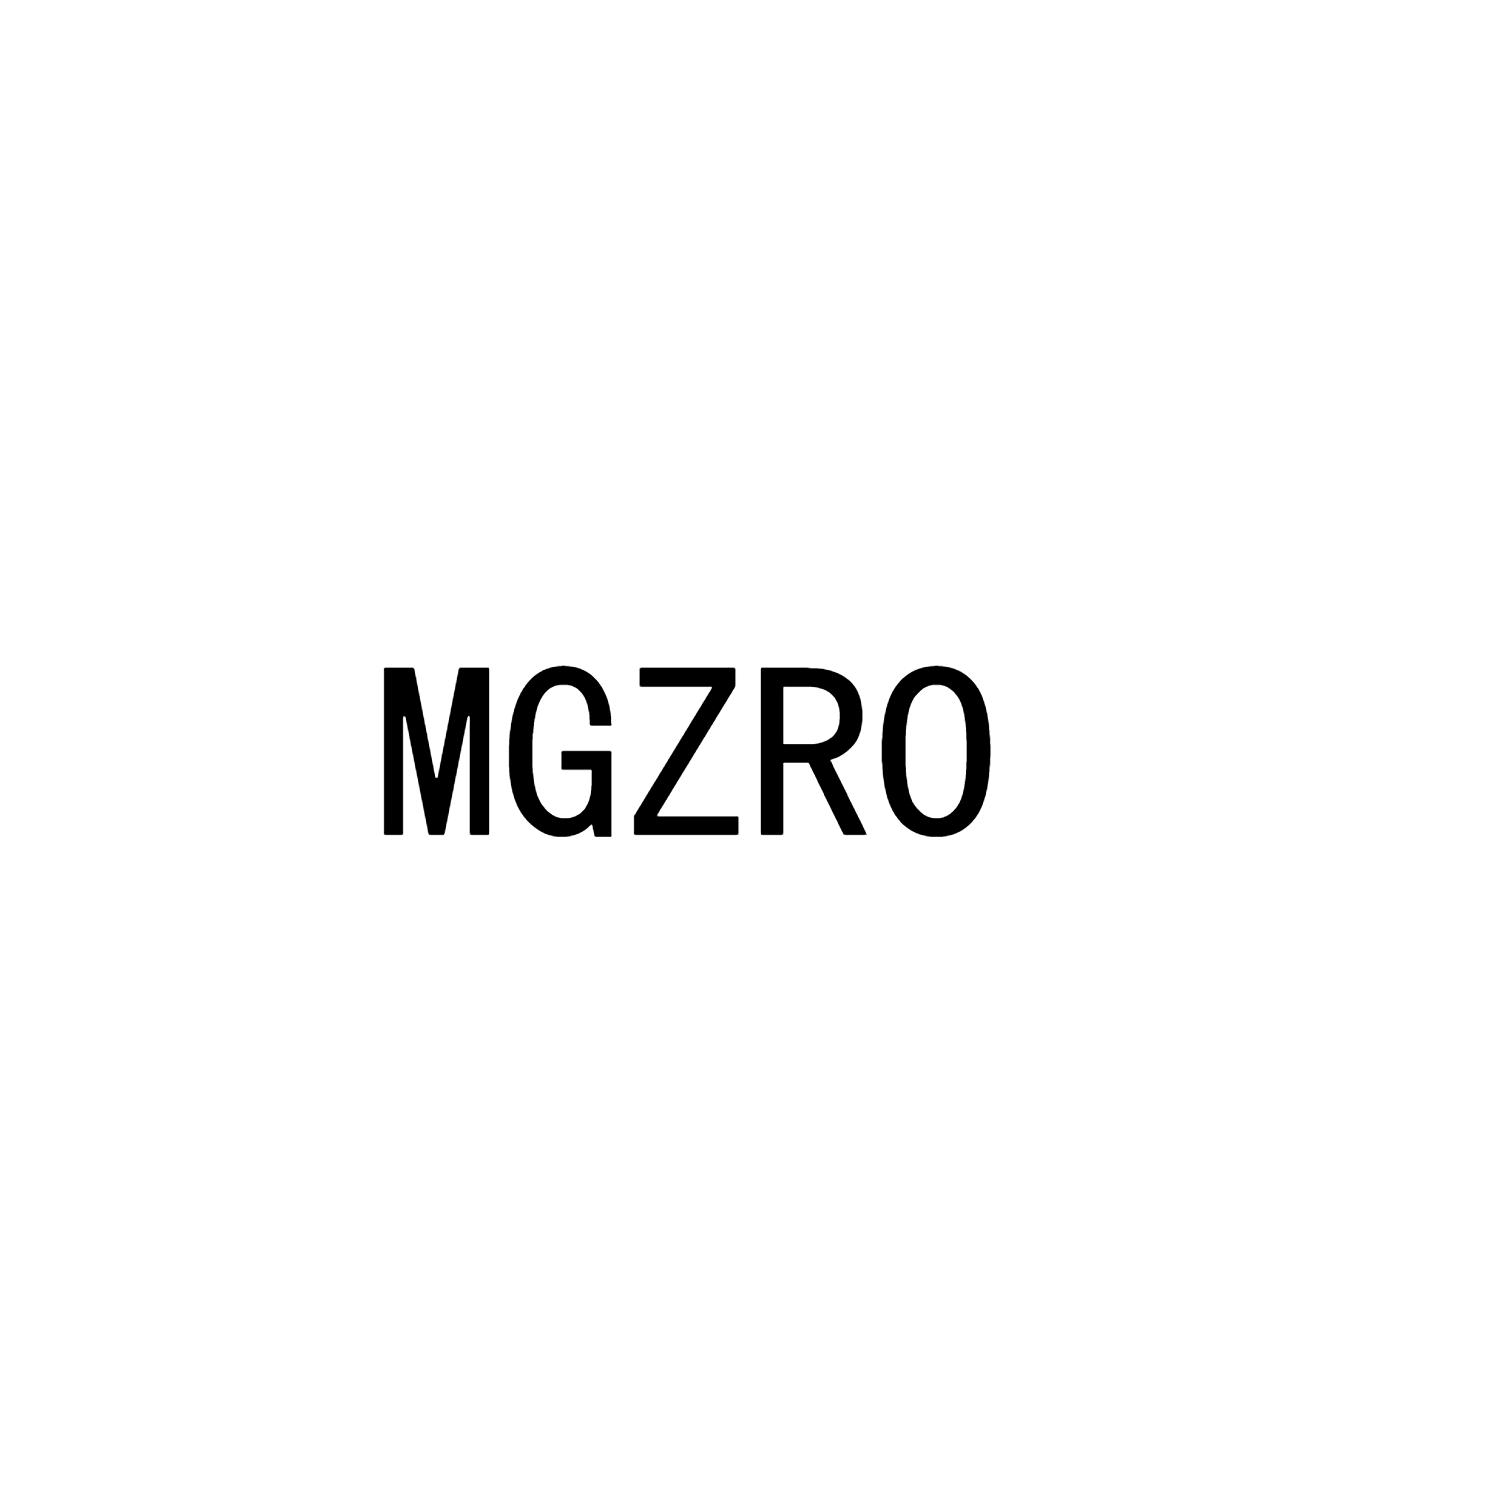 MGZRO商标转让